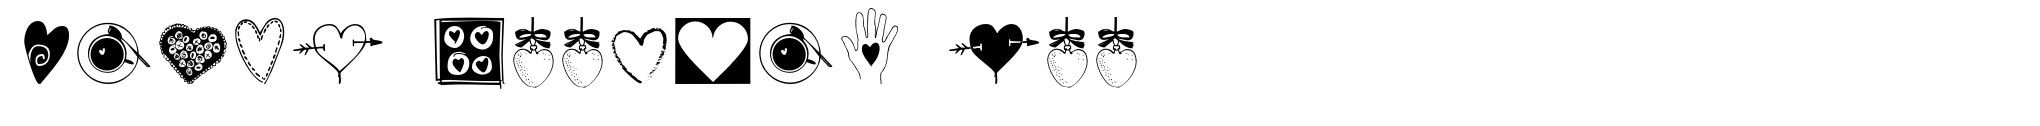 Heart Doodles Too image